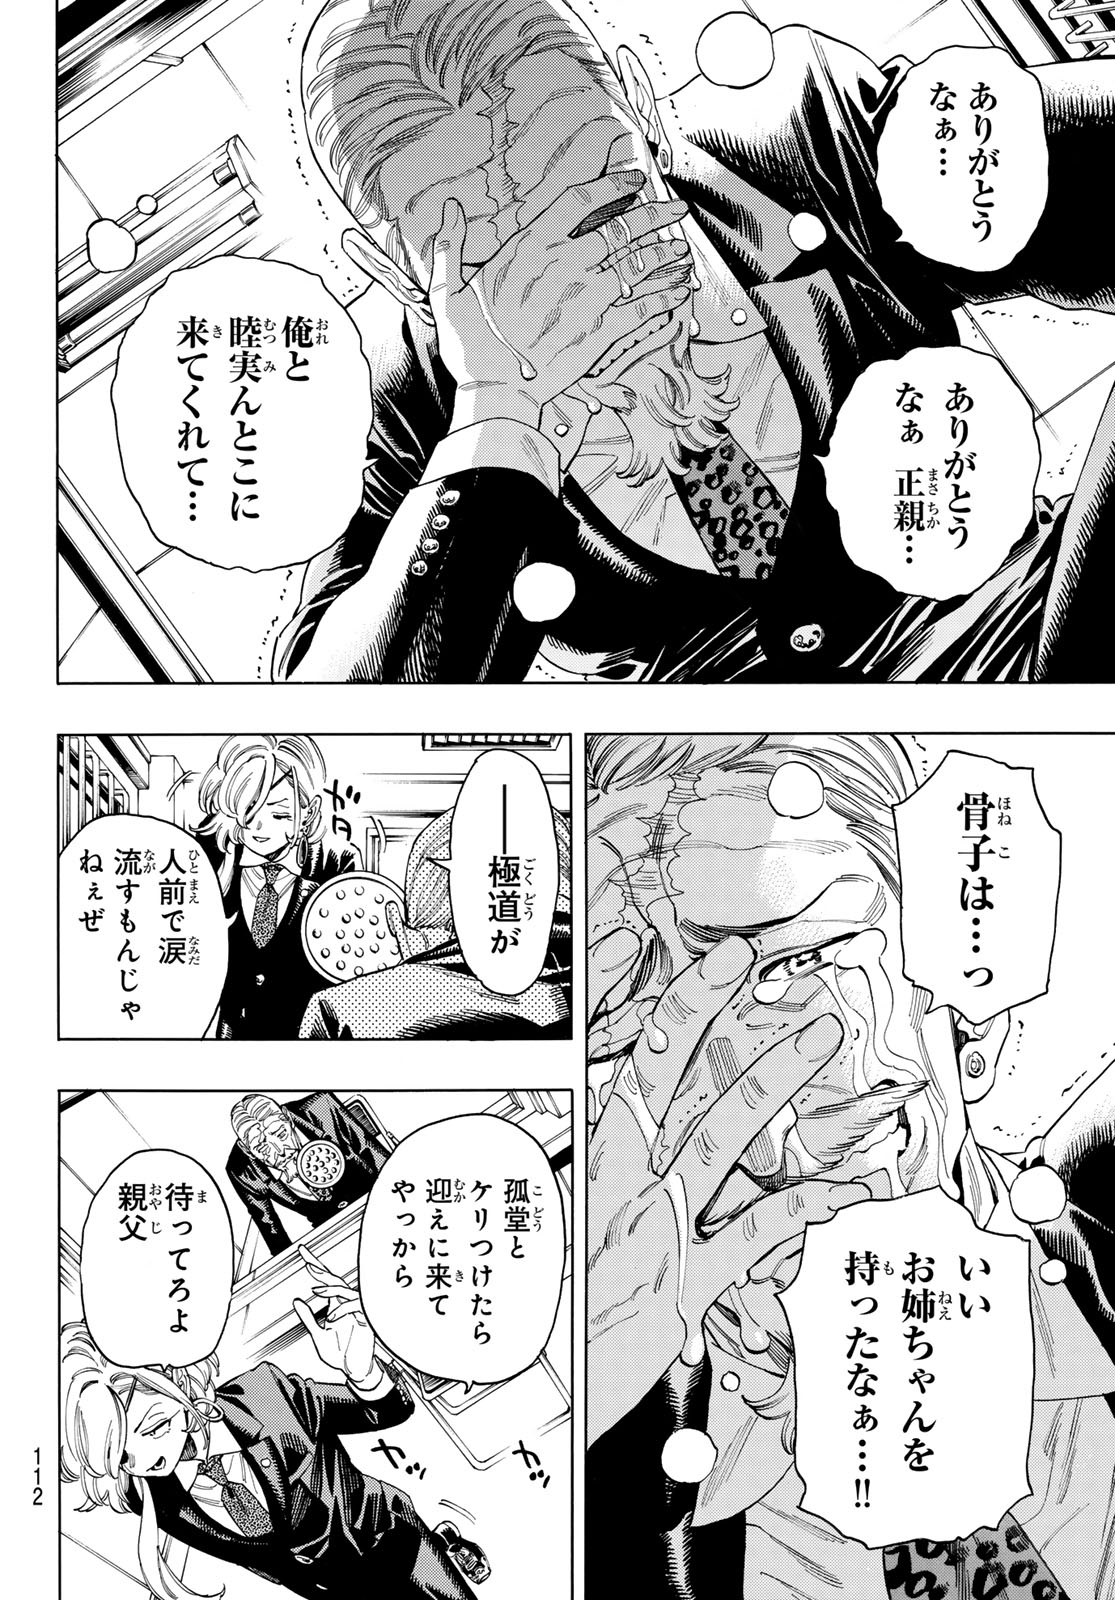 Akabane Honeko no Bodyguard - Chapter 81 - Page 18